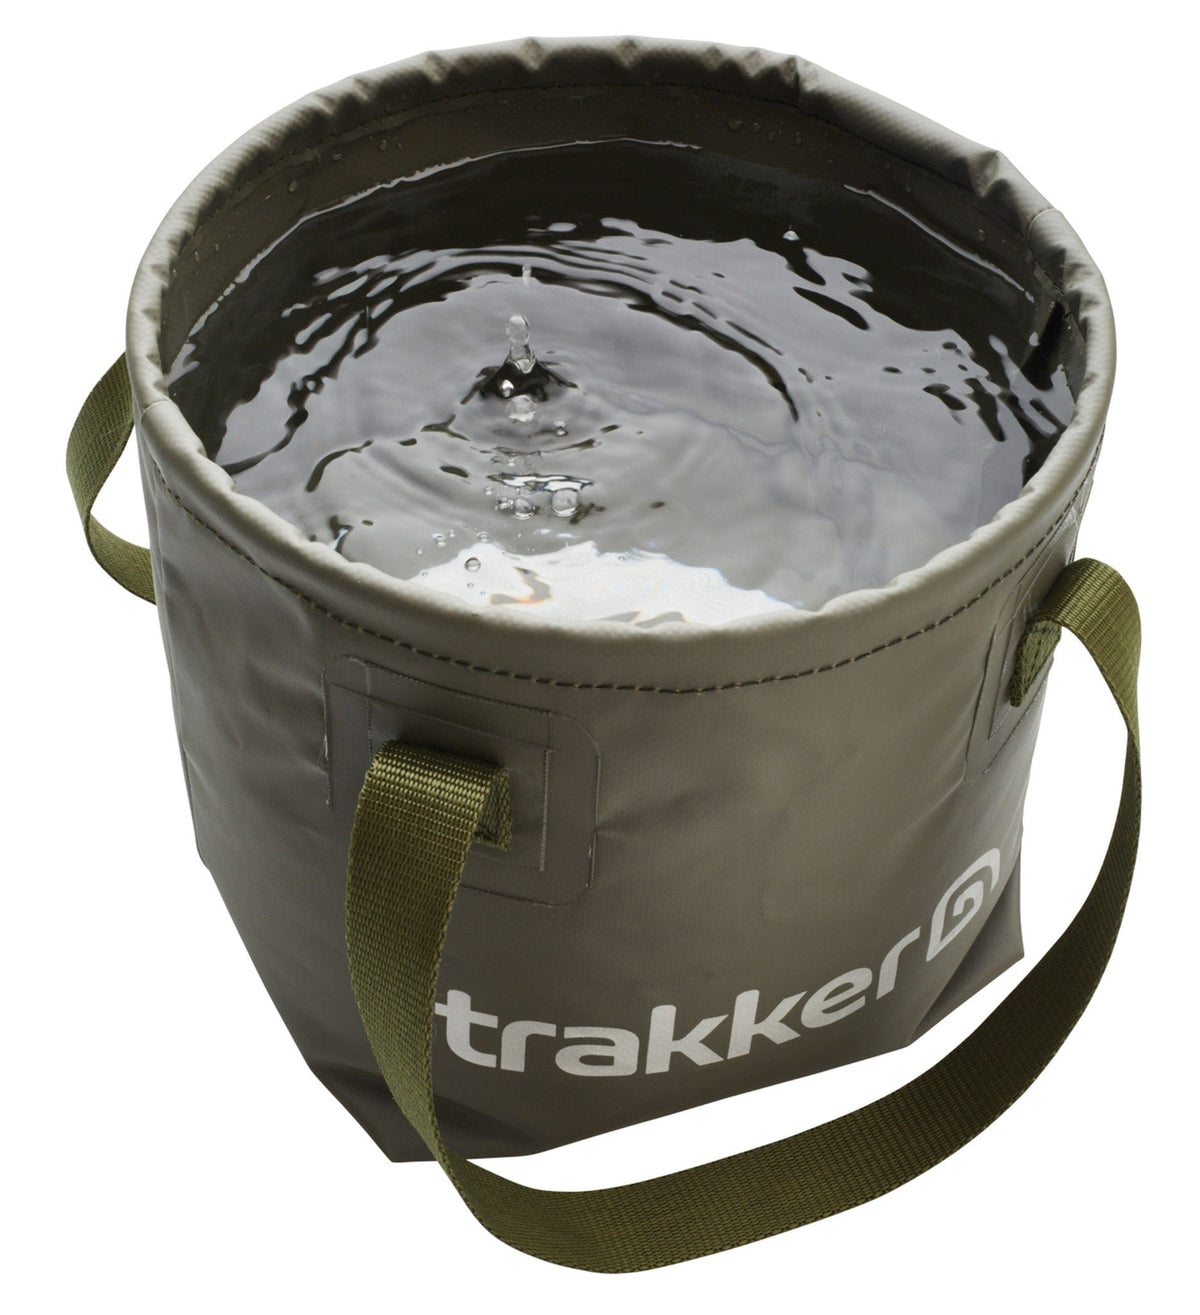 Trakker Collapsible Water Bowl.